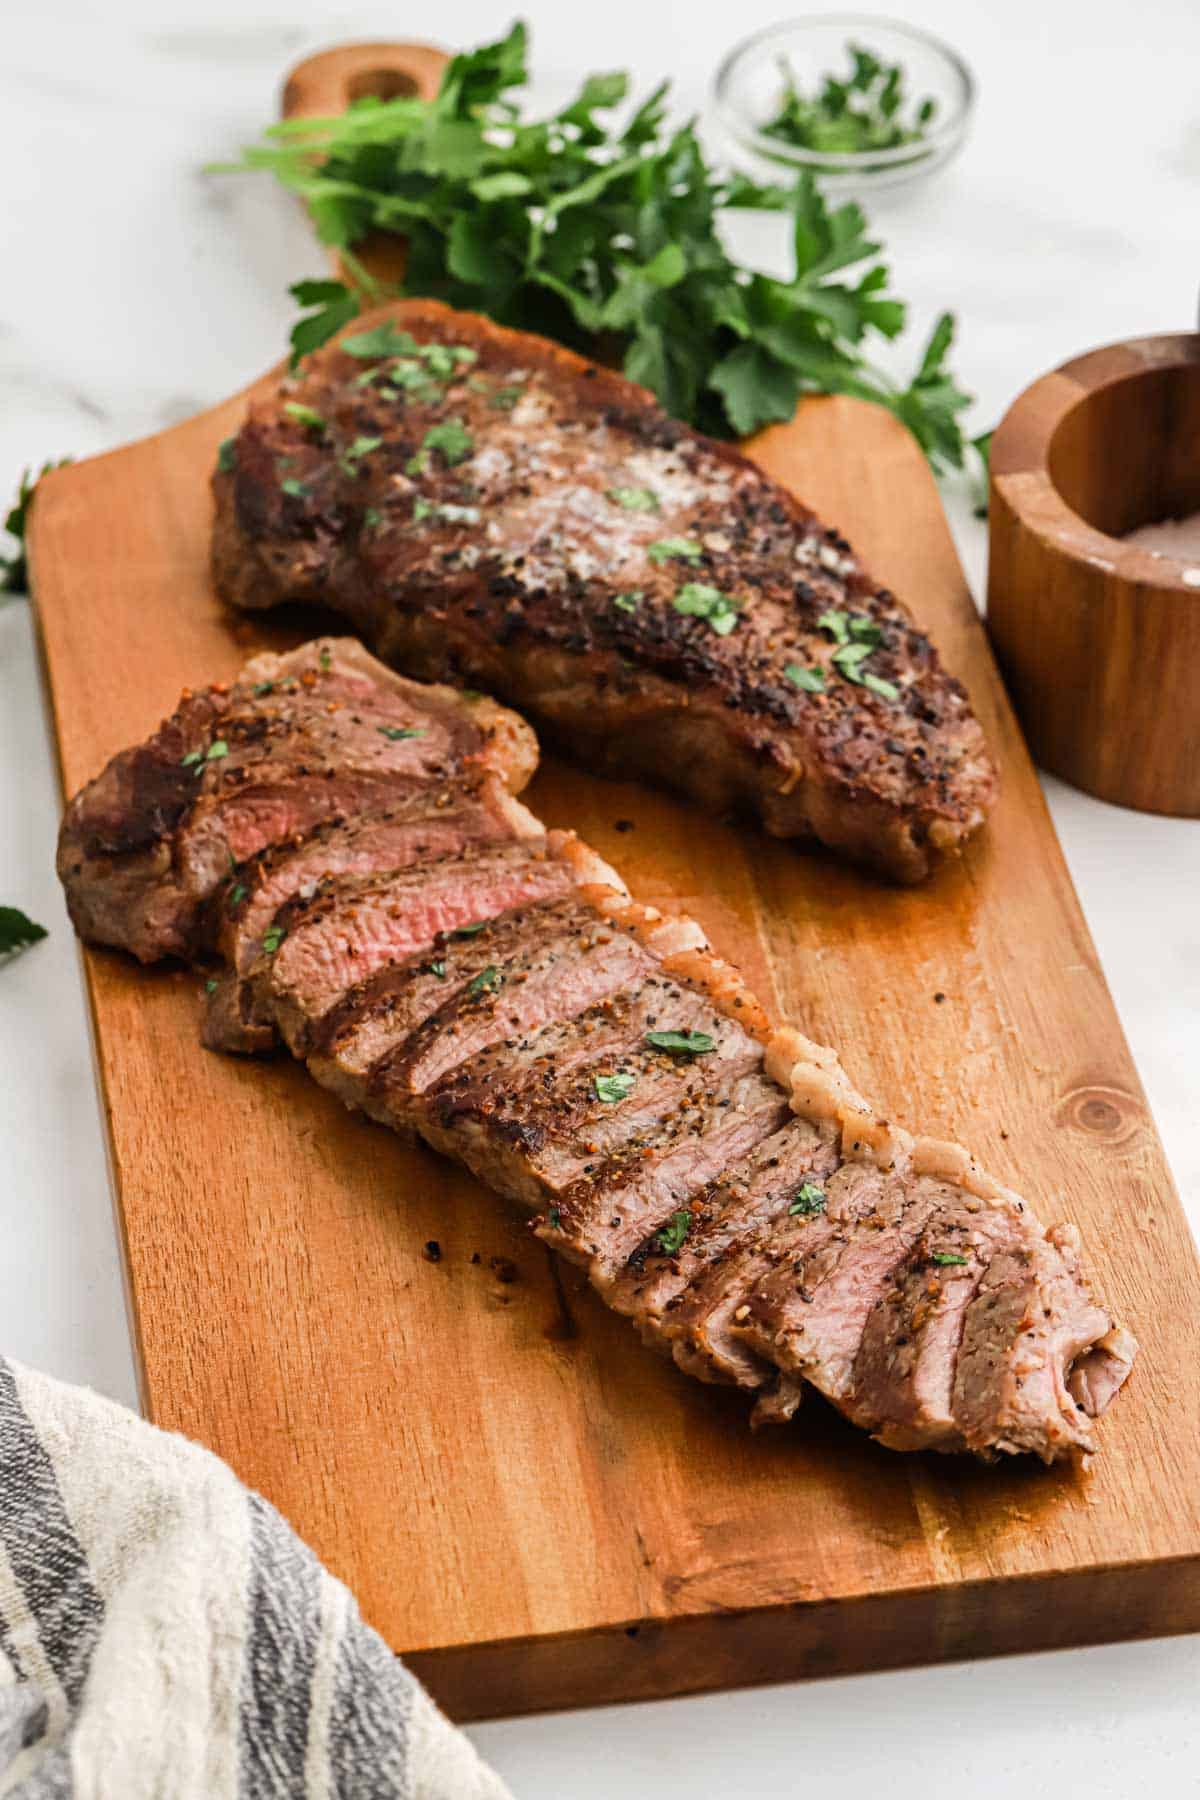 Pan seared steak sliced on a cutting board.